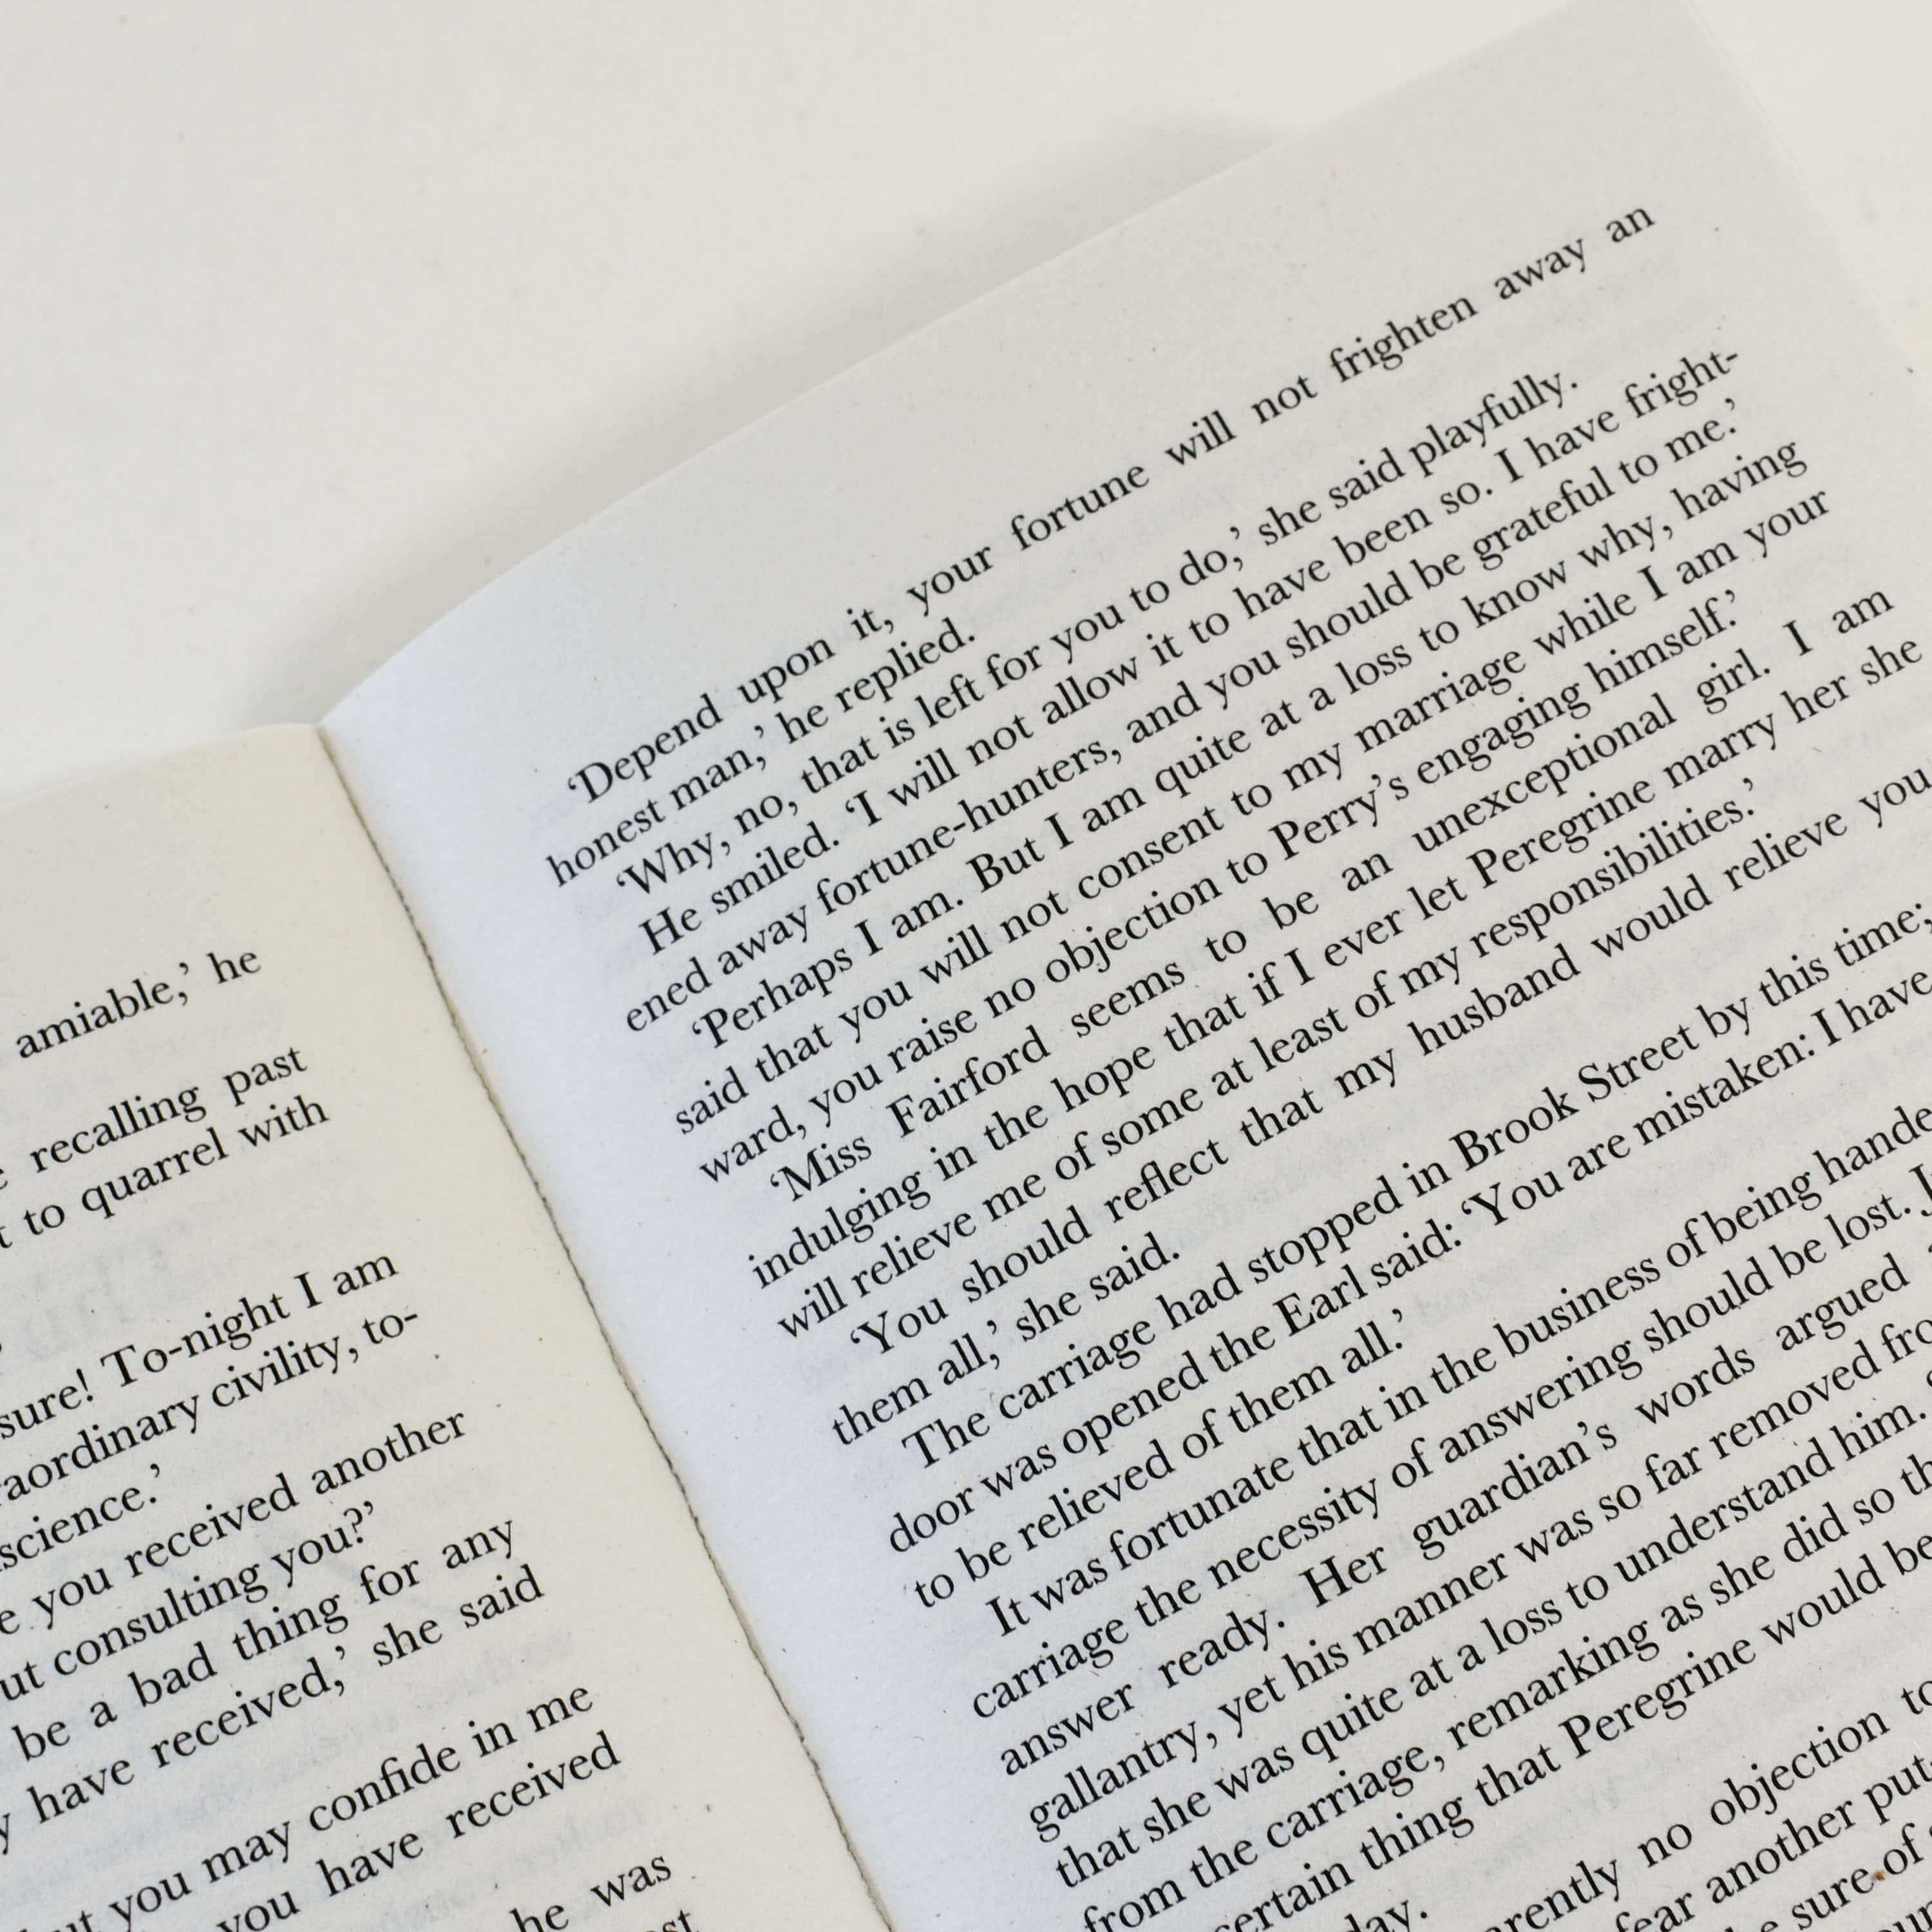 Georgette Heyer 10 Books Collection Set (Moth, Frederica, Regency, Arabella, Devil, Shades, Lady, Sophy, Cotillion, Venetia) - Fiction - Paperback